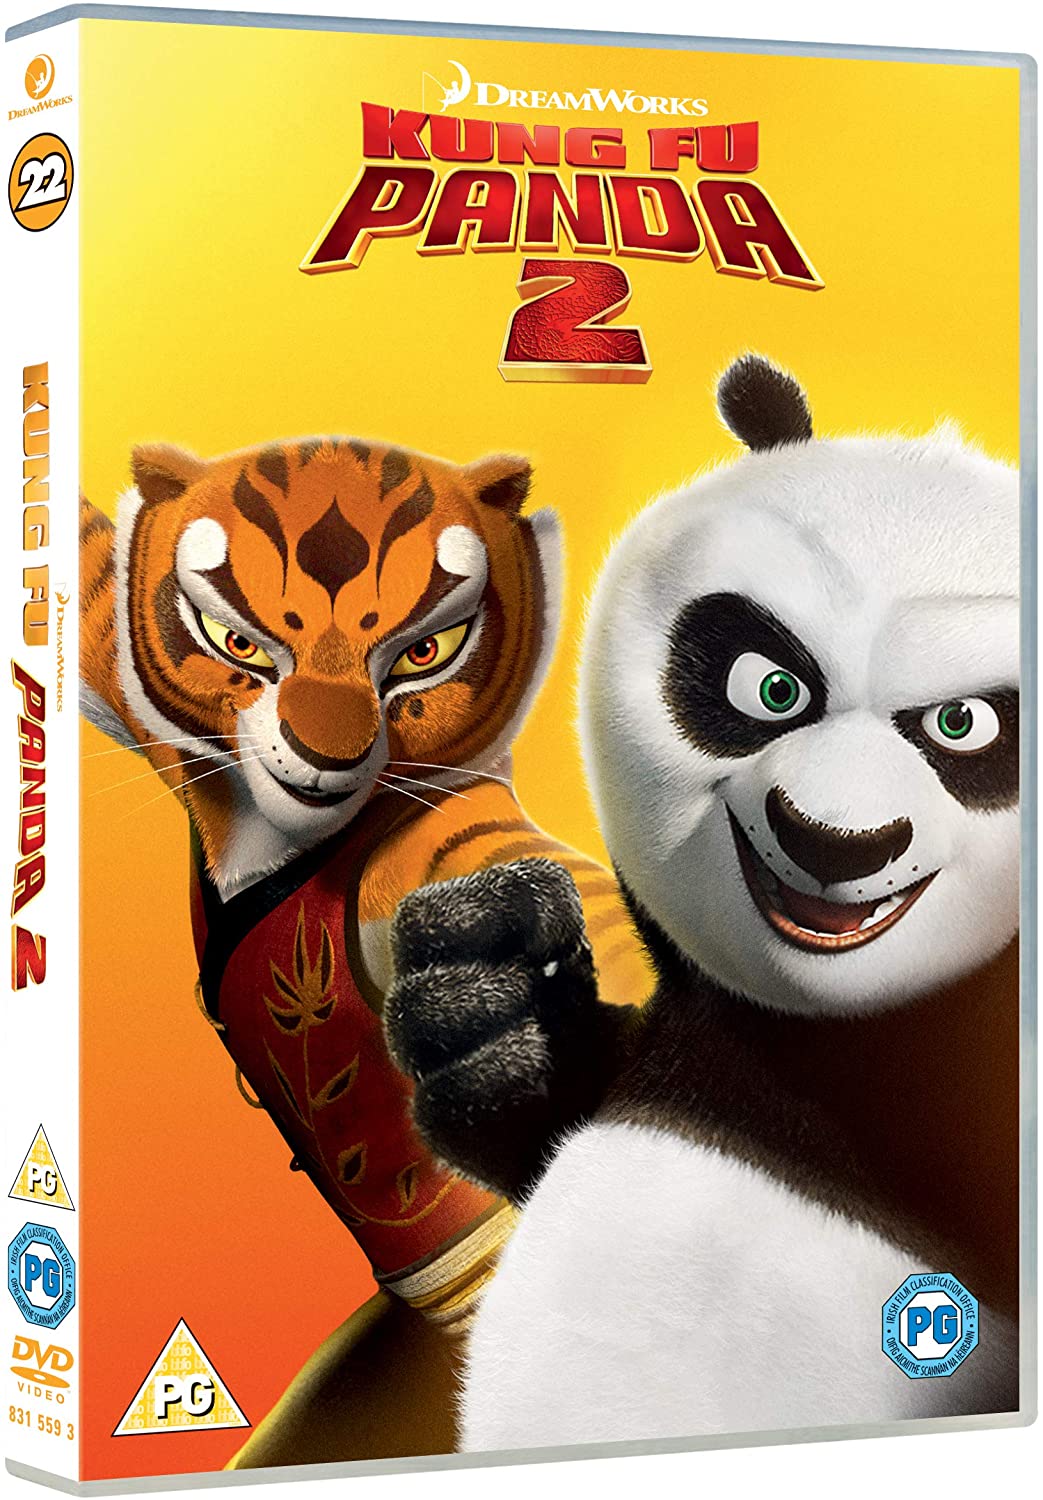 Kung Fu Panda 2 [2011] (Dreamworks) (DVD)